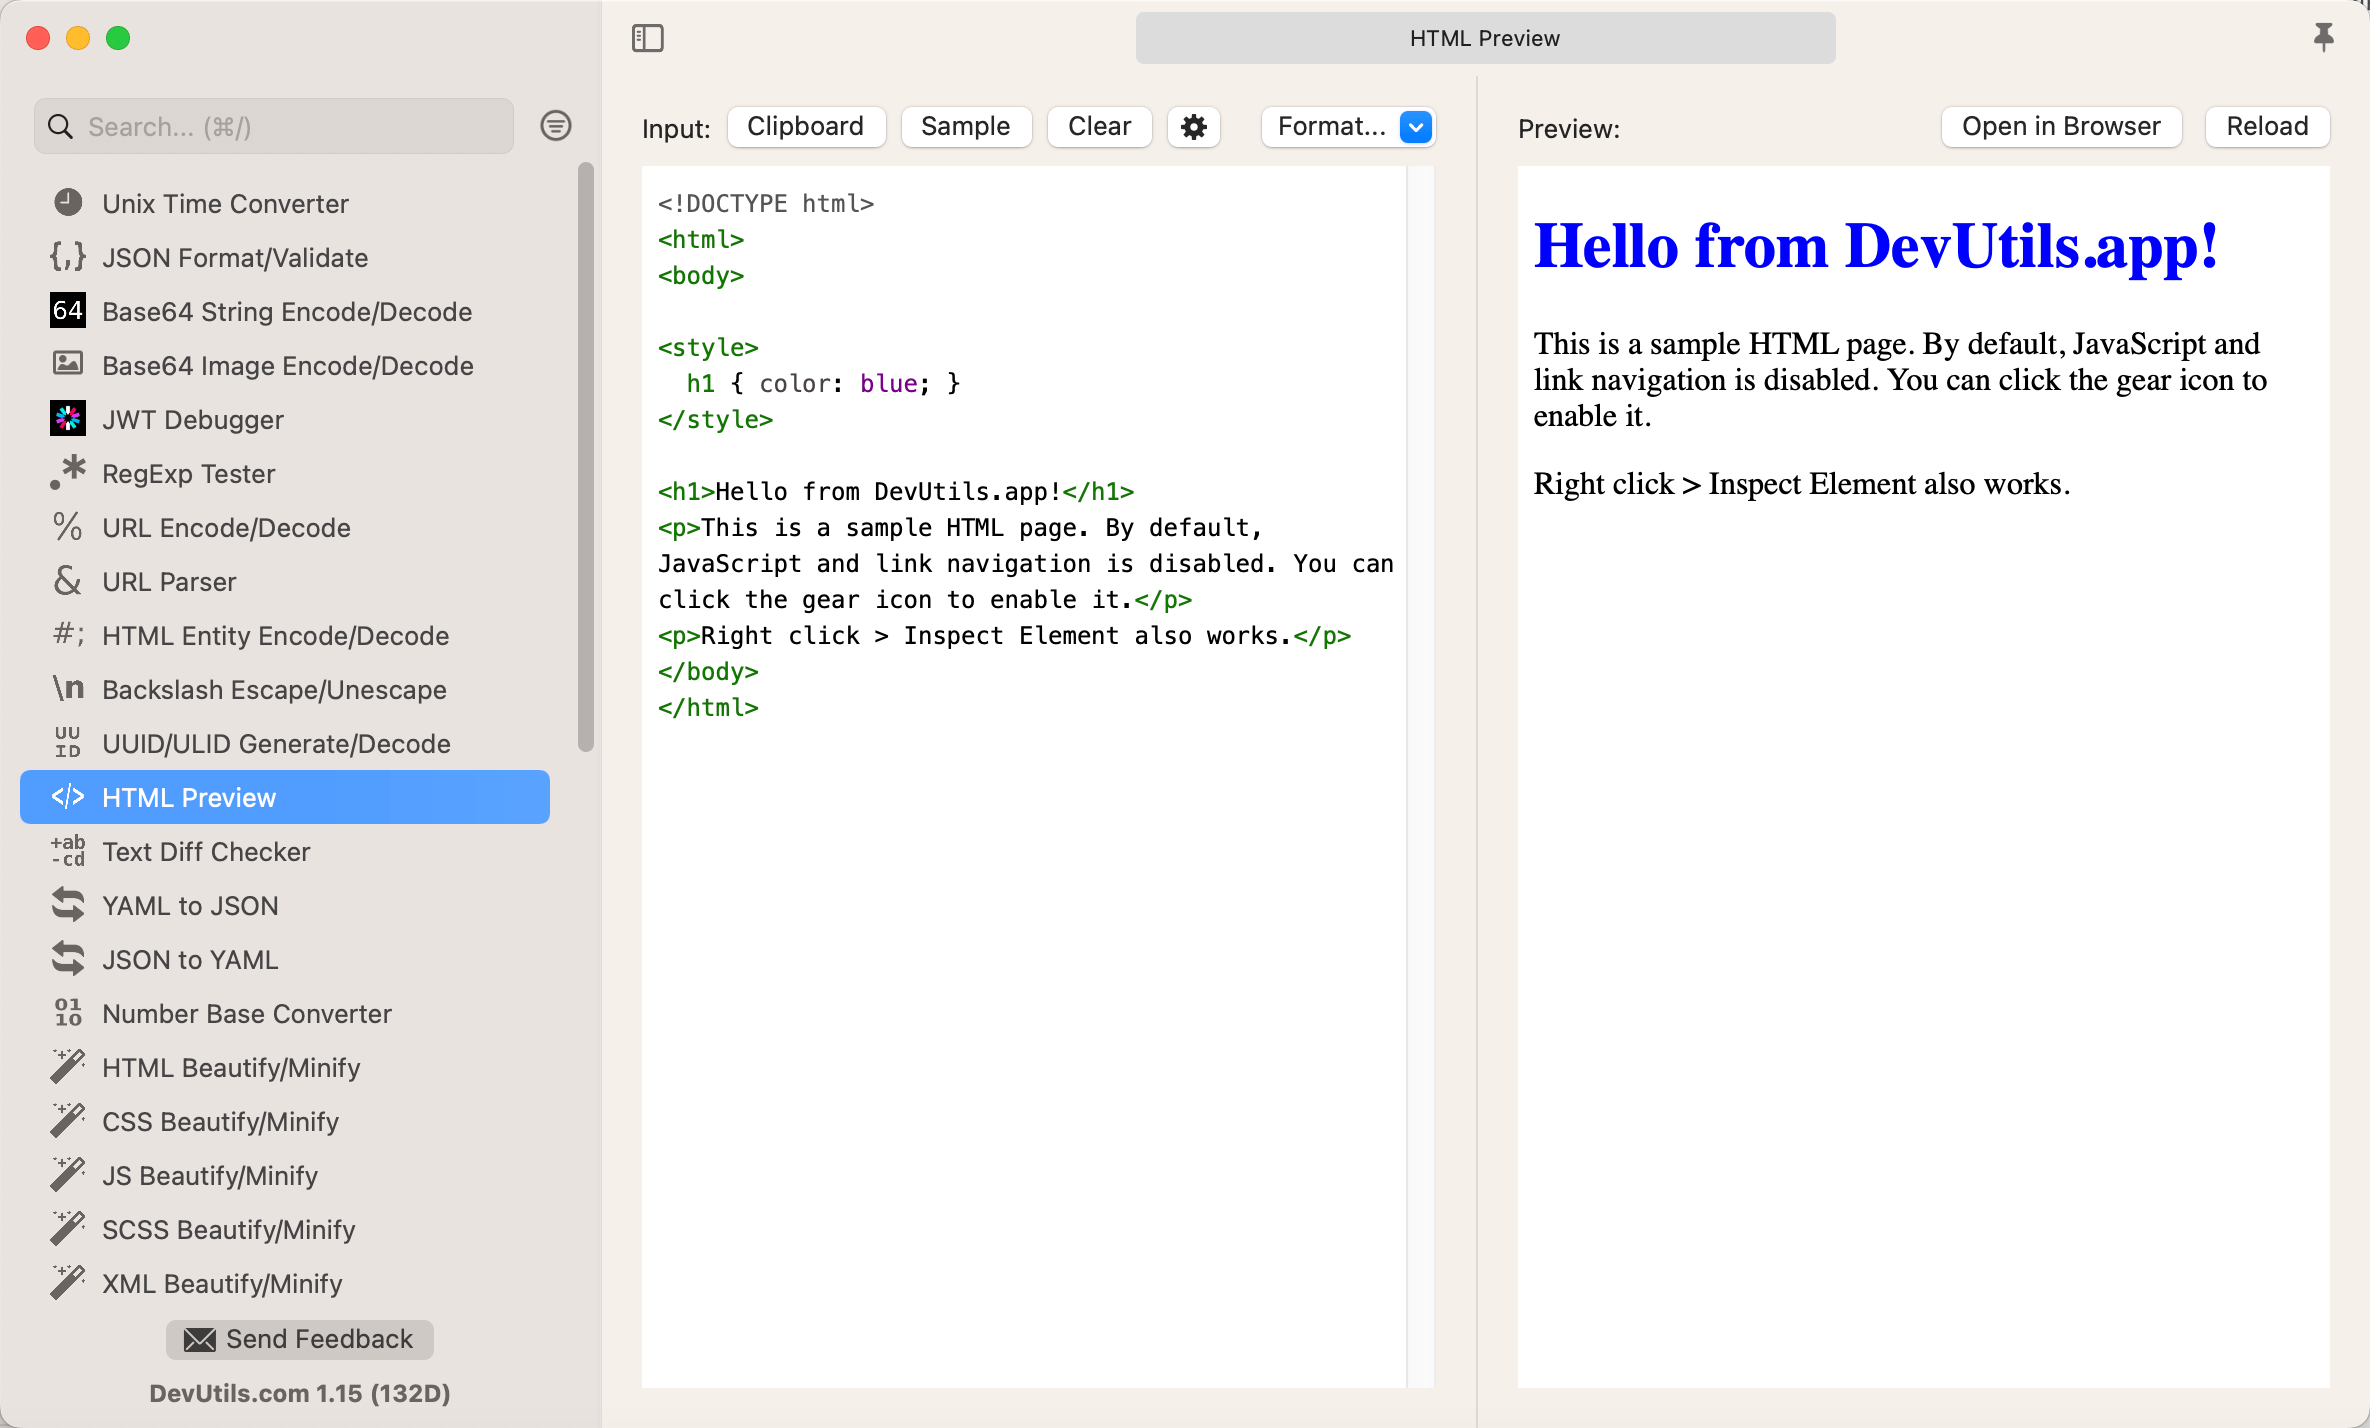 HTML Preview macOS app